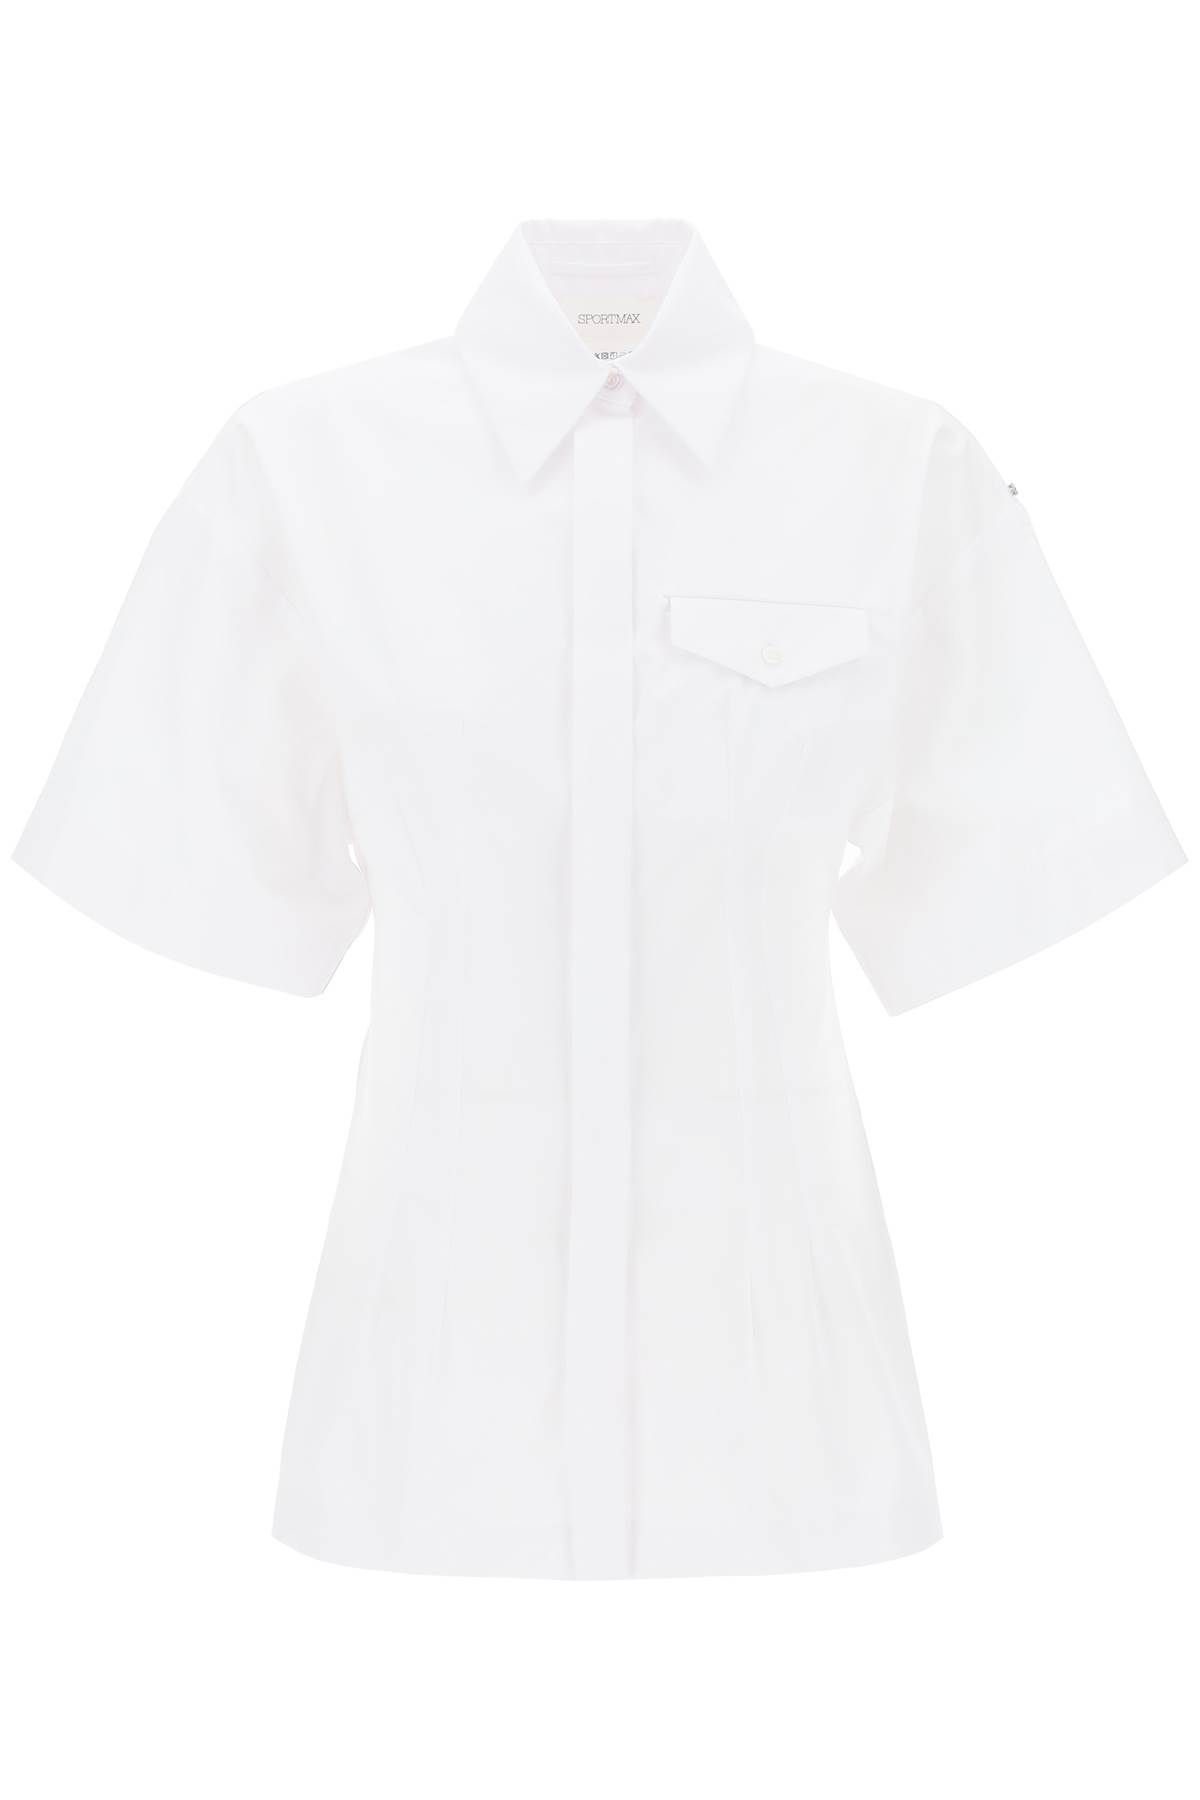 Shop Sportmax "poplin Curved Shirt In White